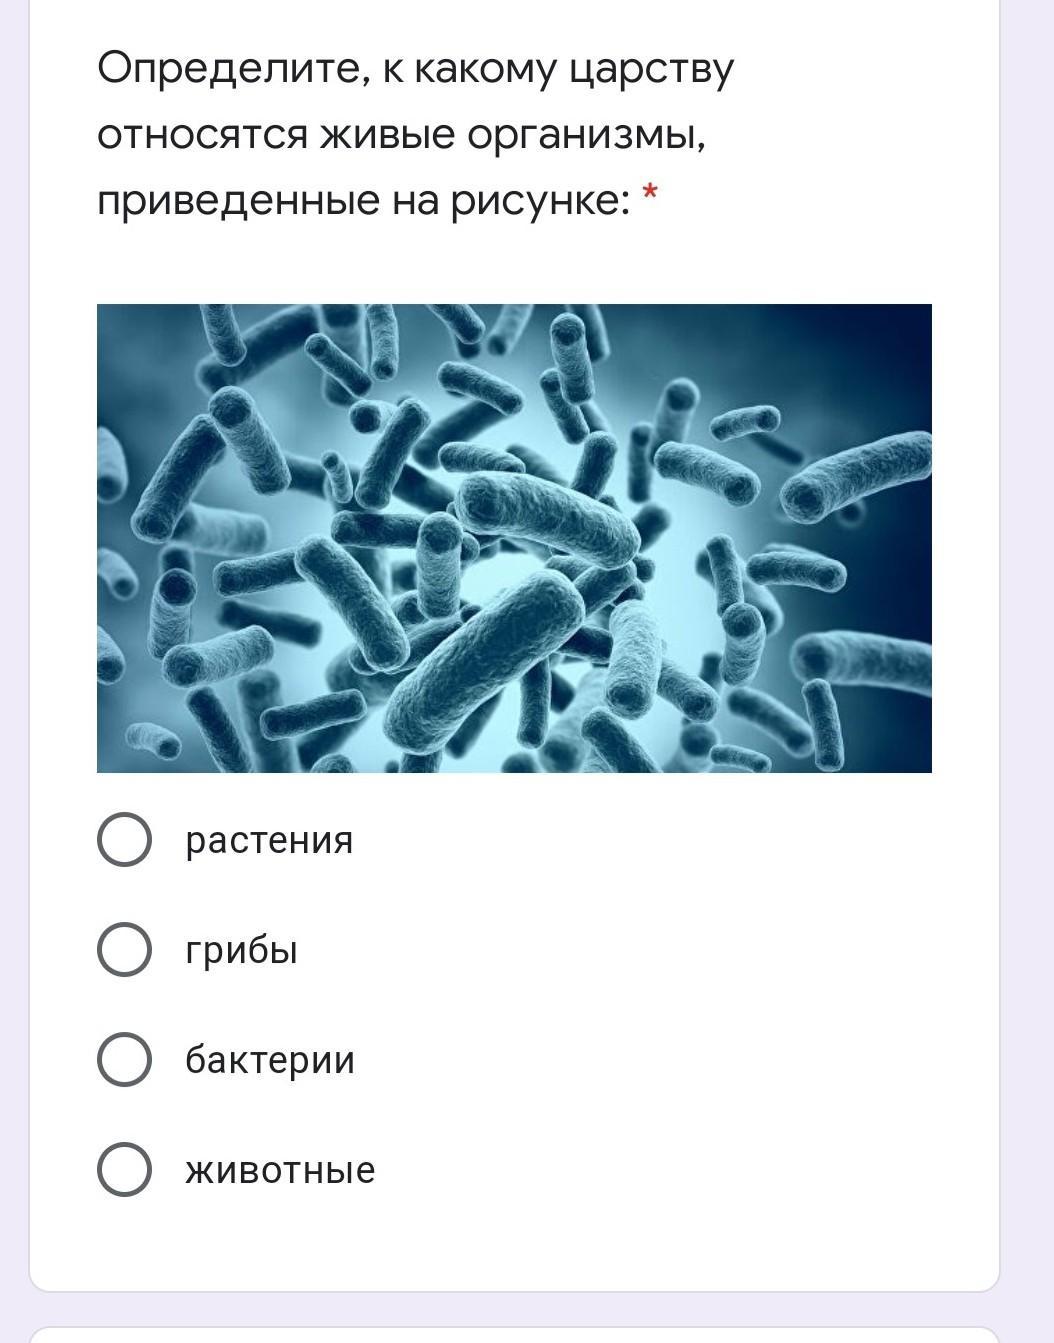 Бактерии являются тест